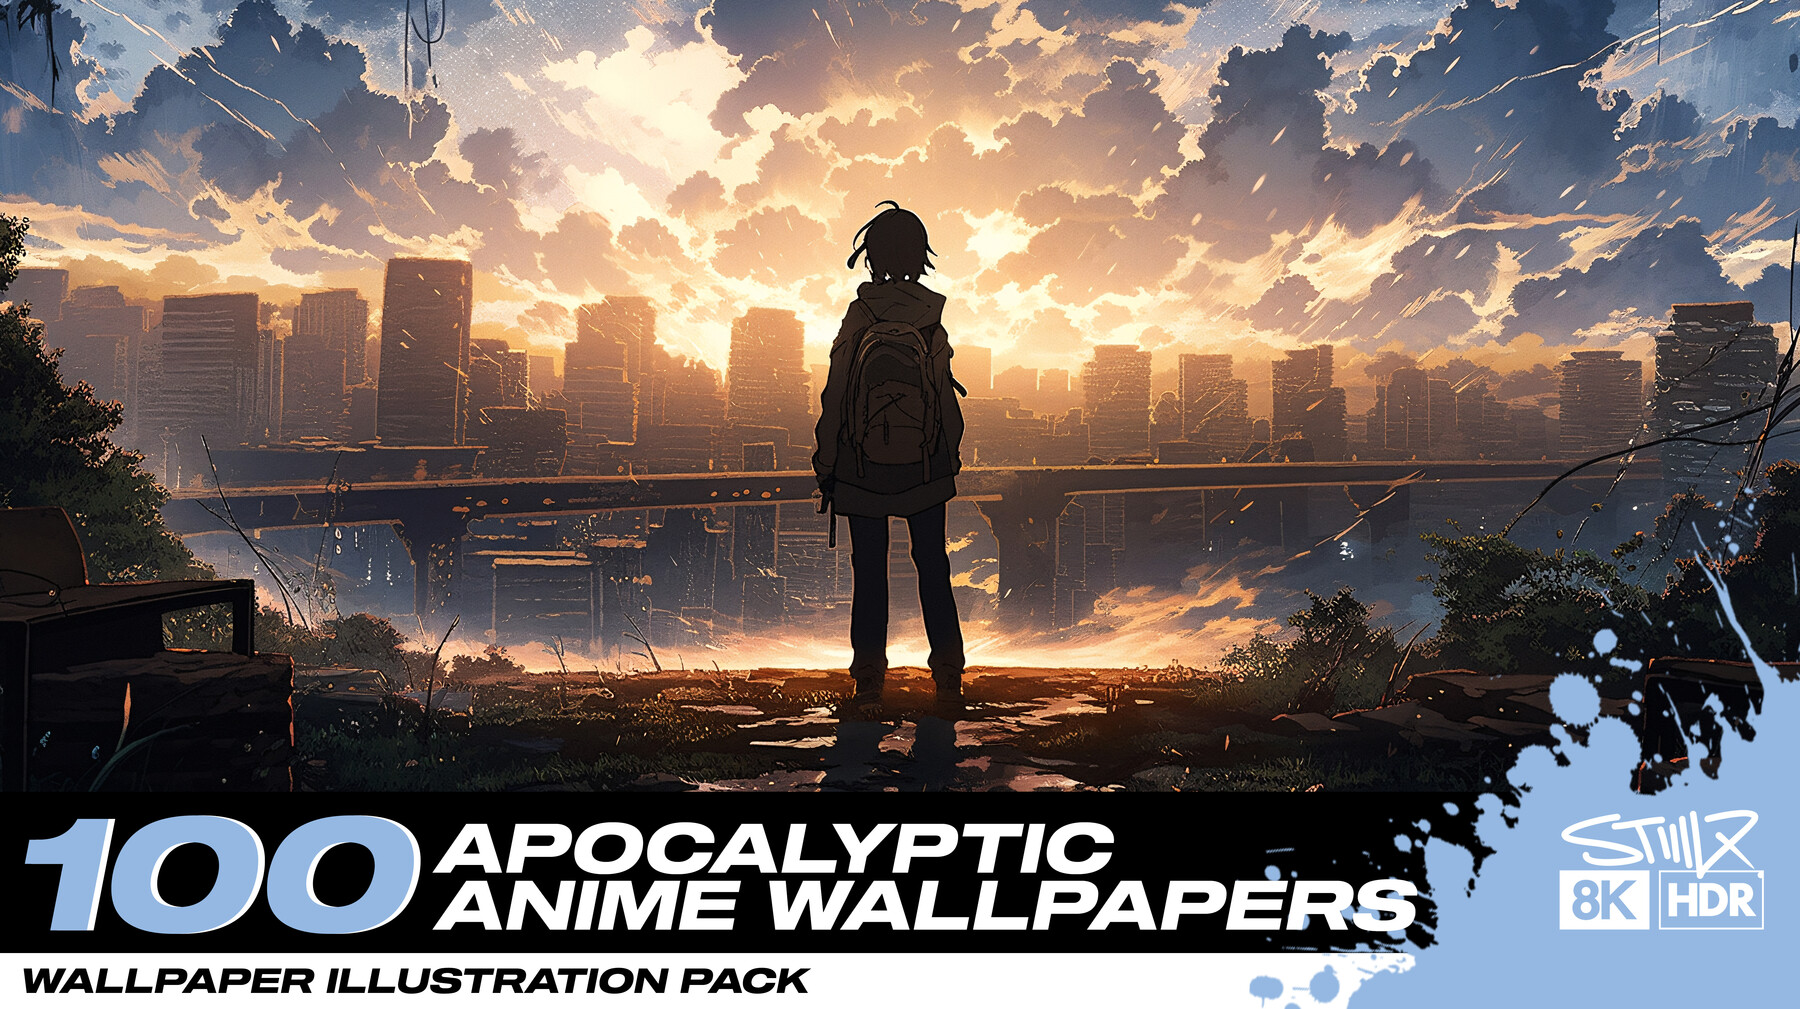 100+] 4k Anime Wallpapers